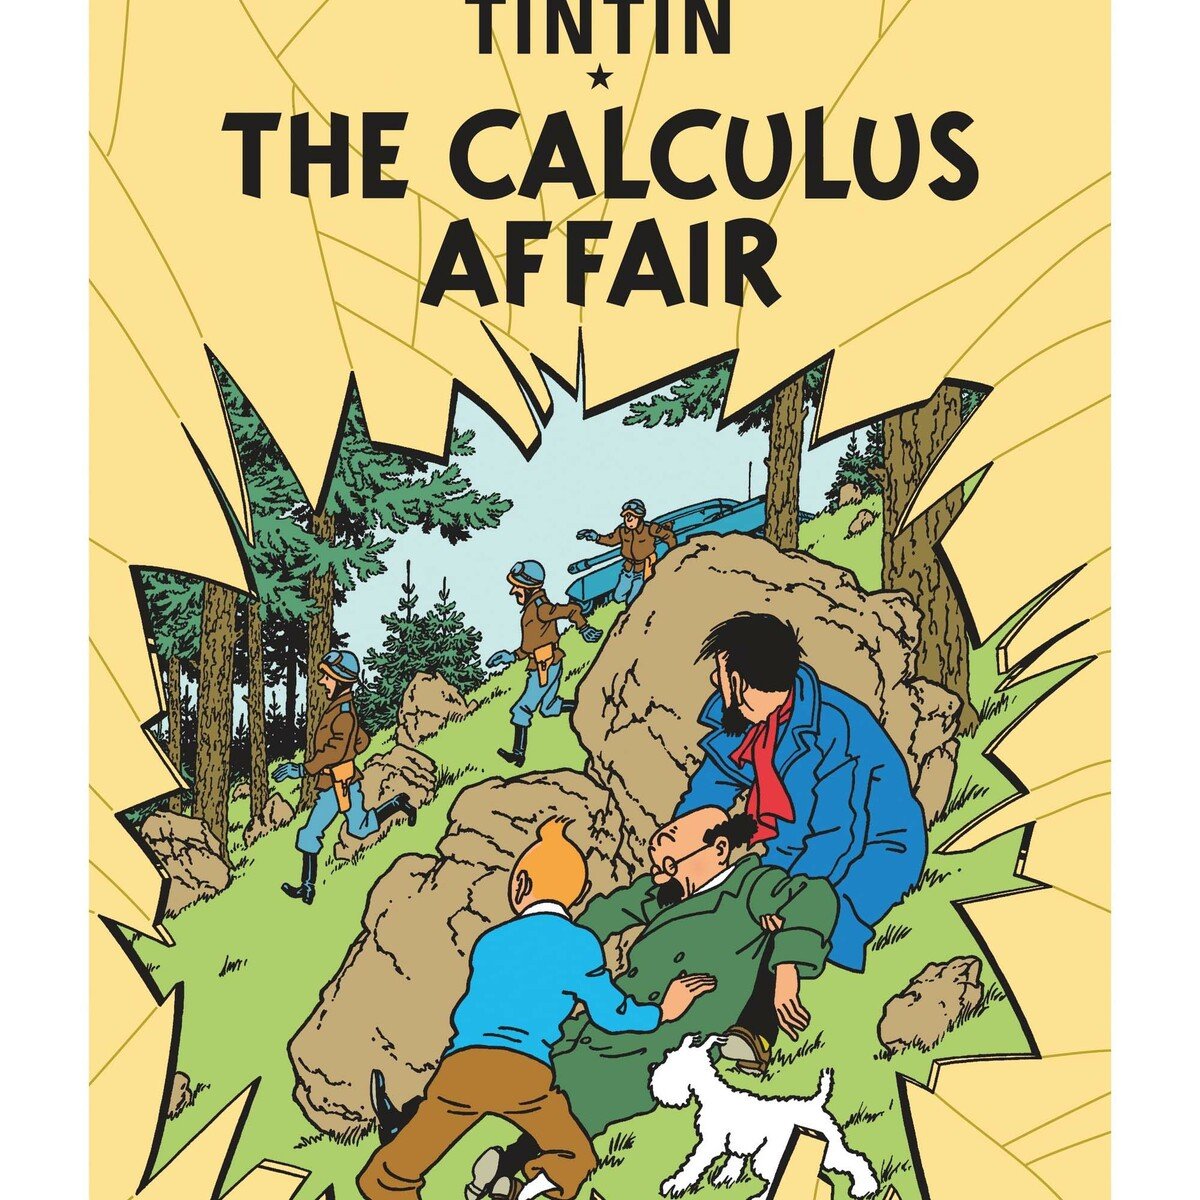 The Calculus Affair